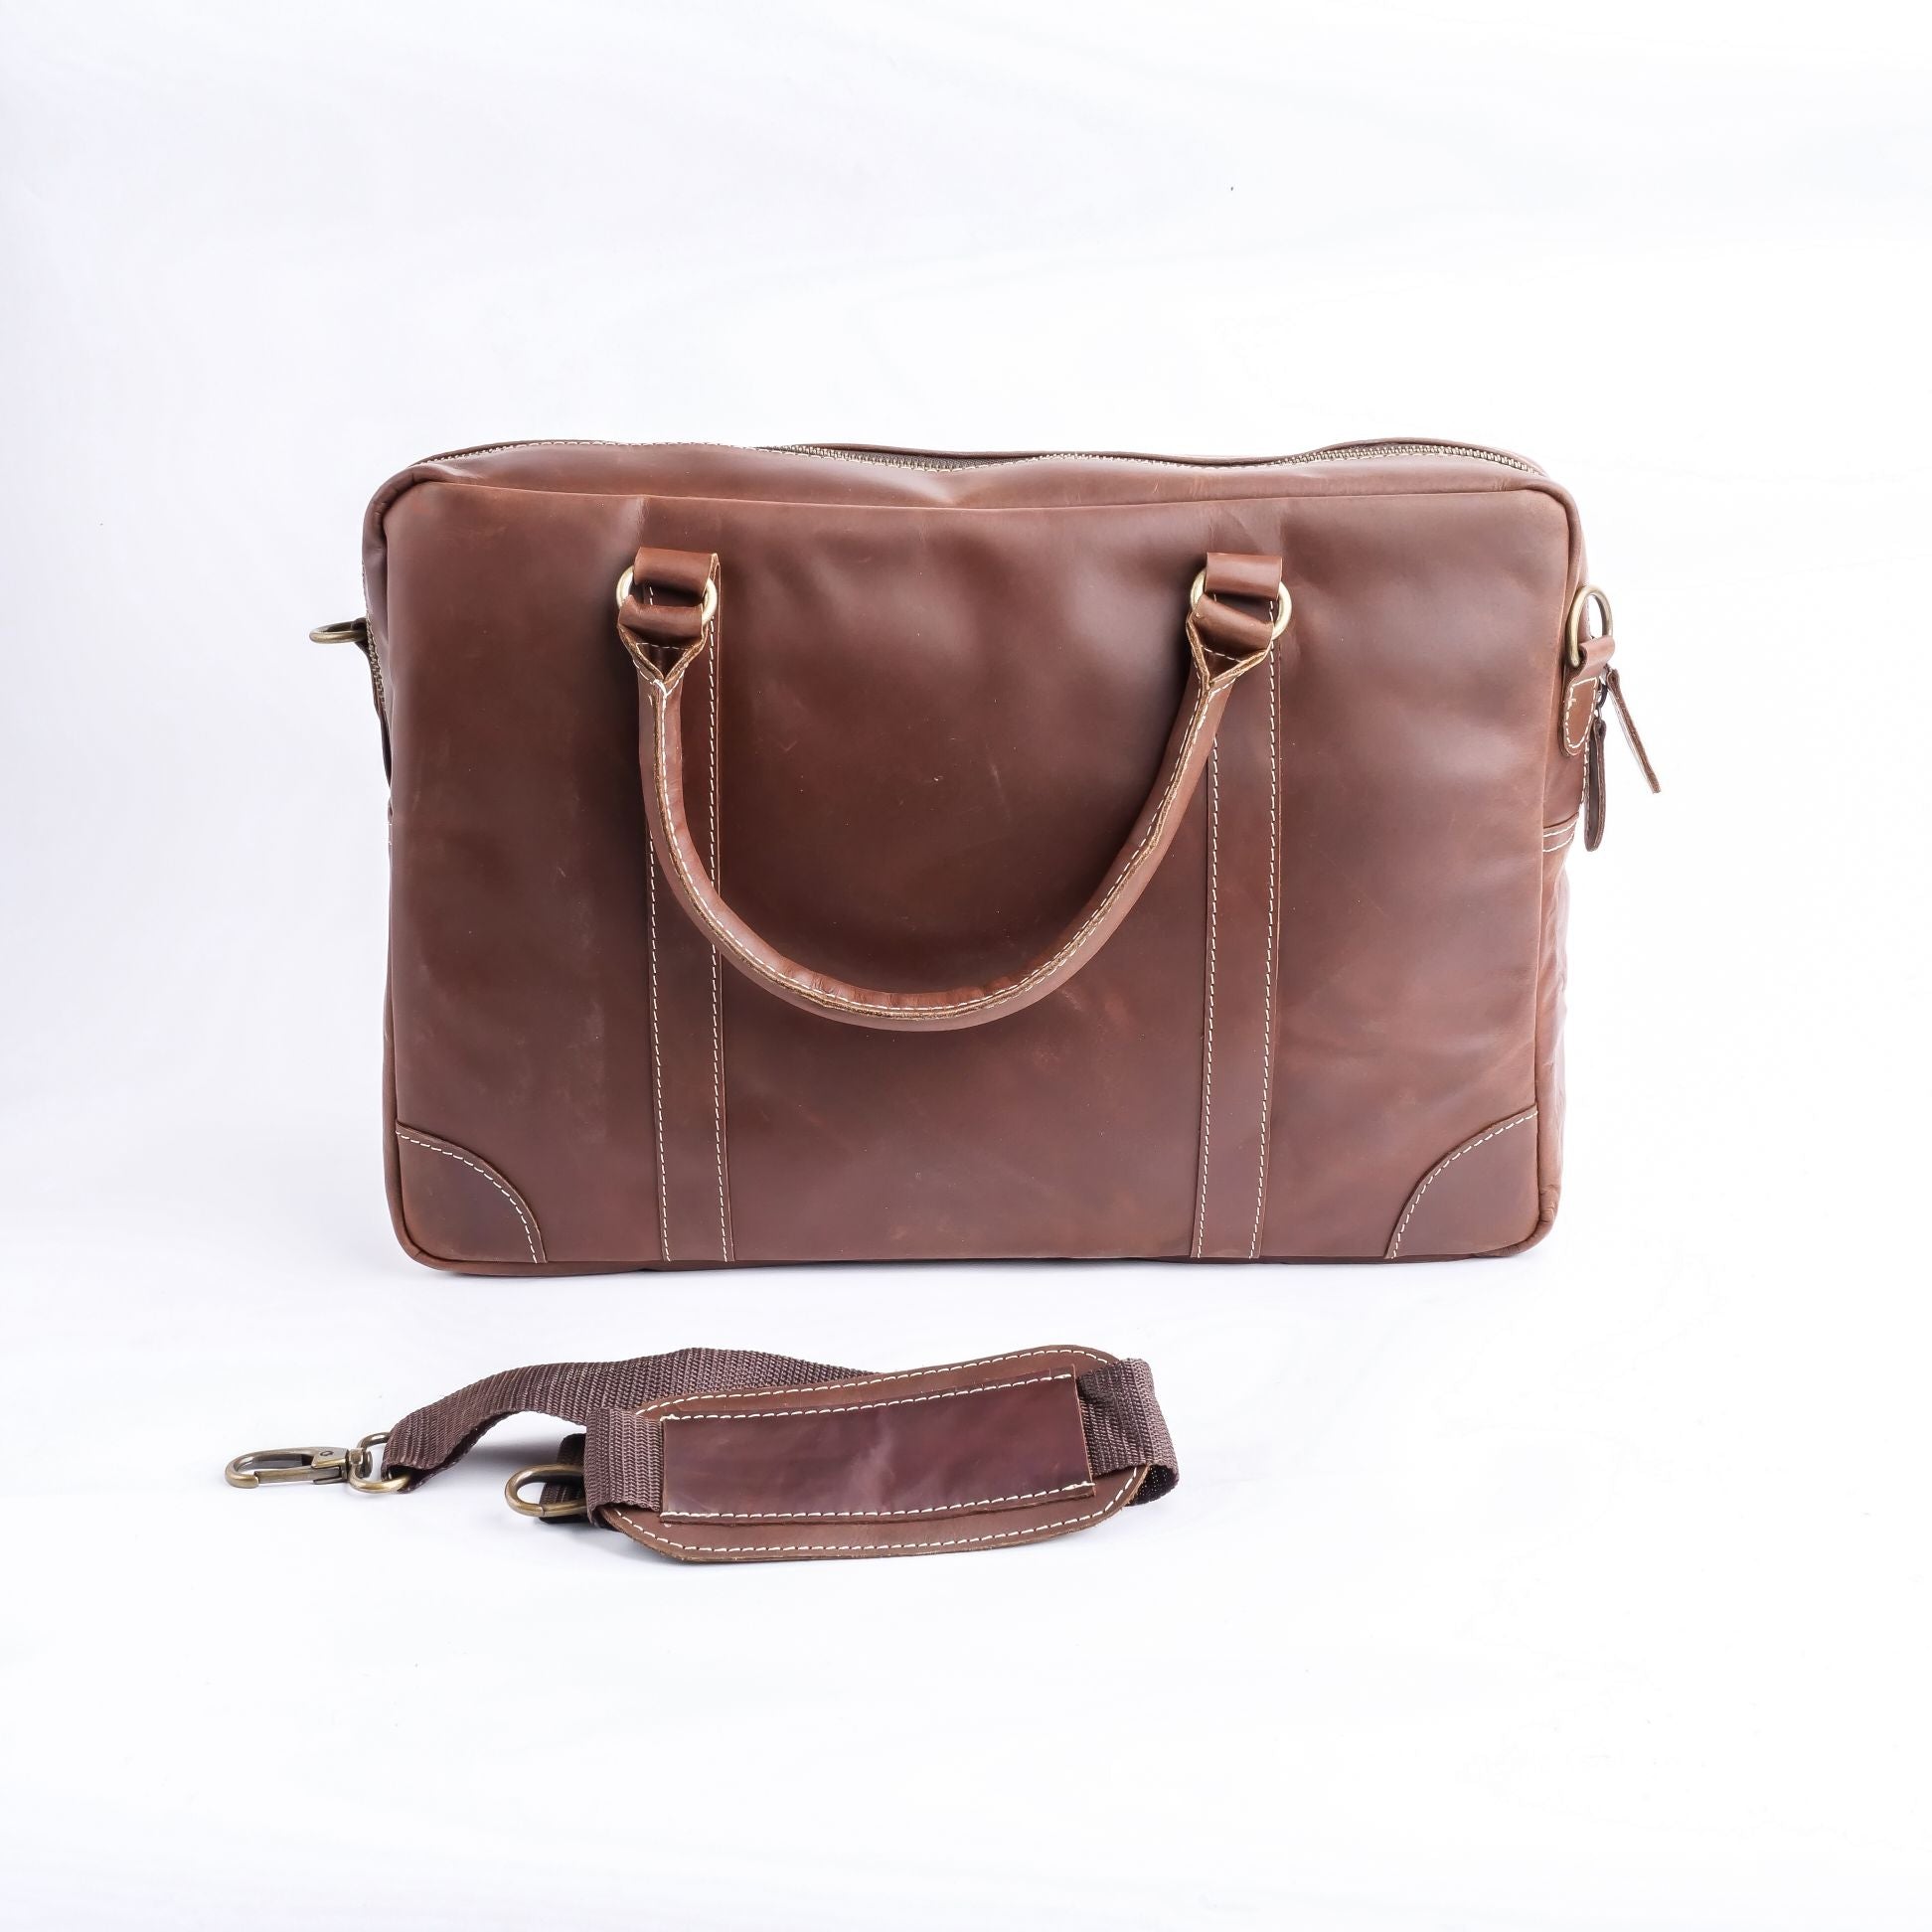 The Maverick Vintage Tan Brown Leather Laptop Bag